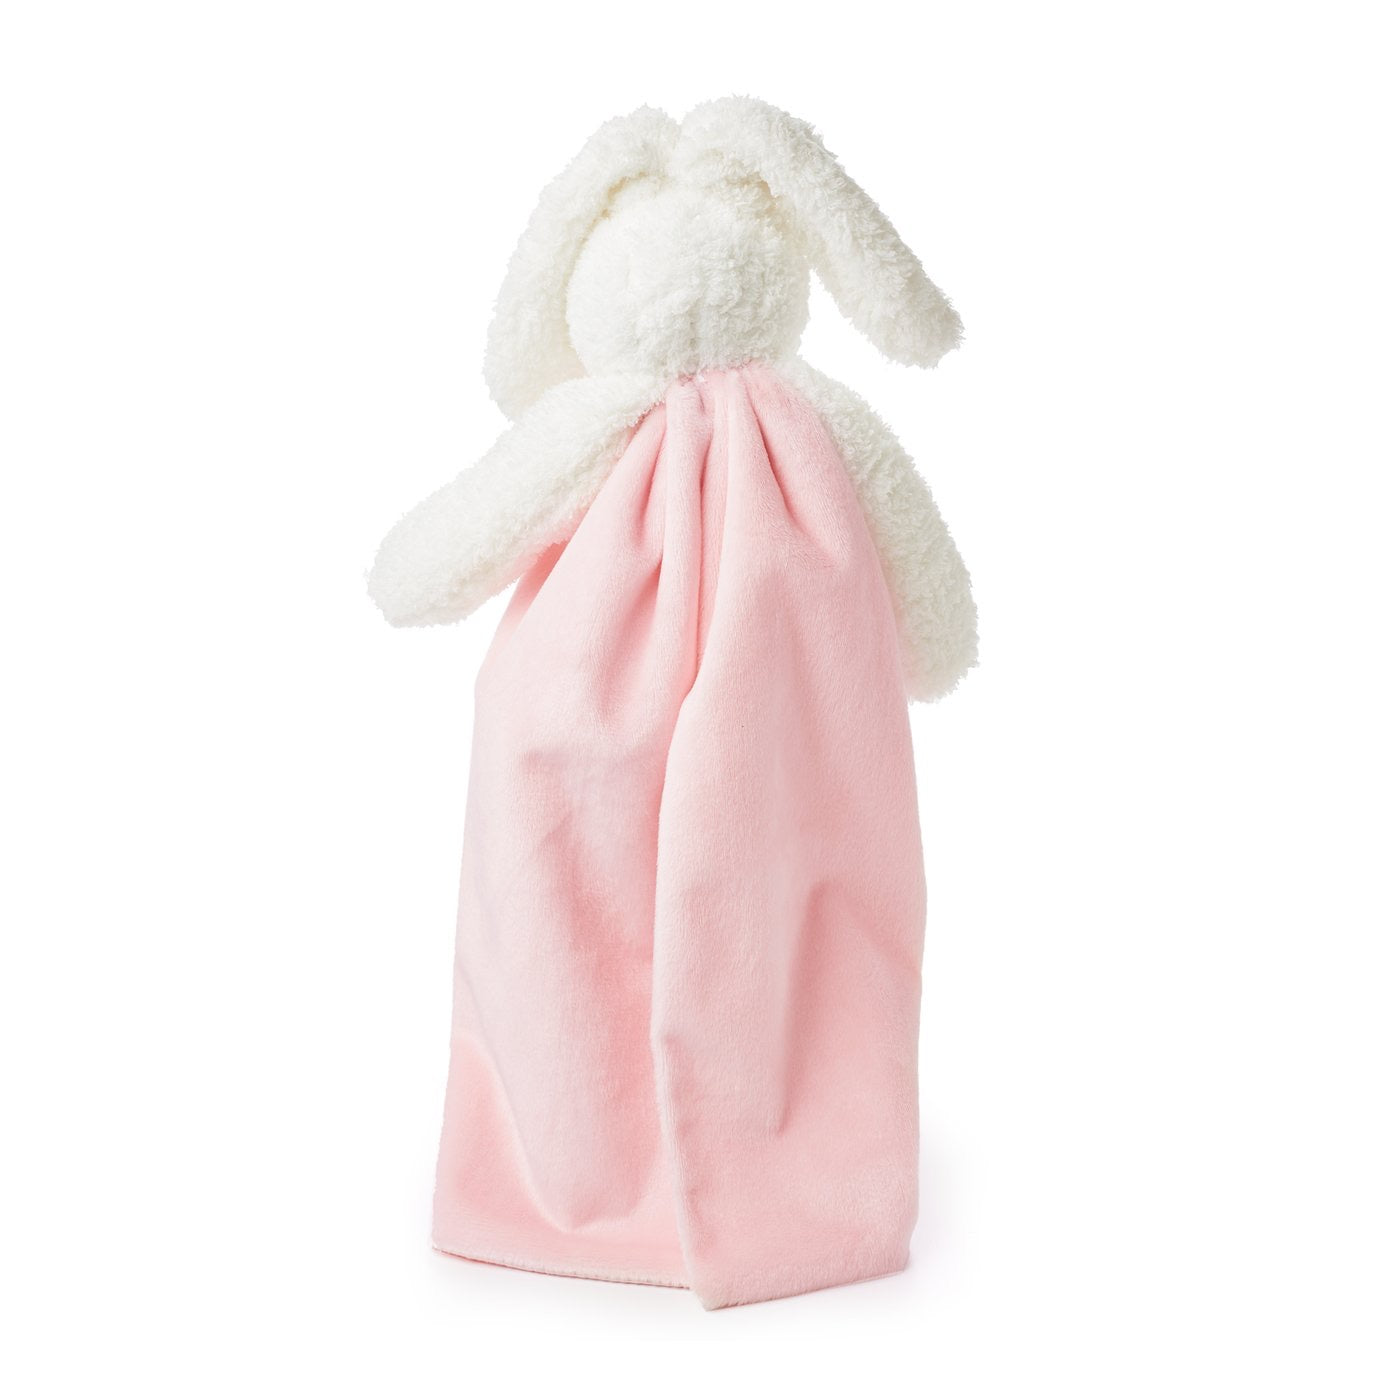 Blossom Bunny’s Everything Baby Bundle Gift Set